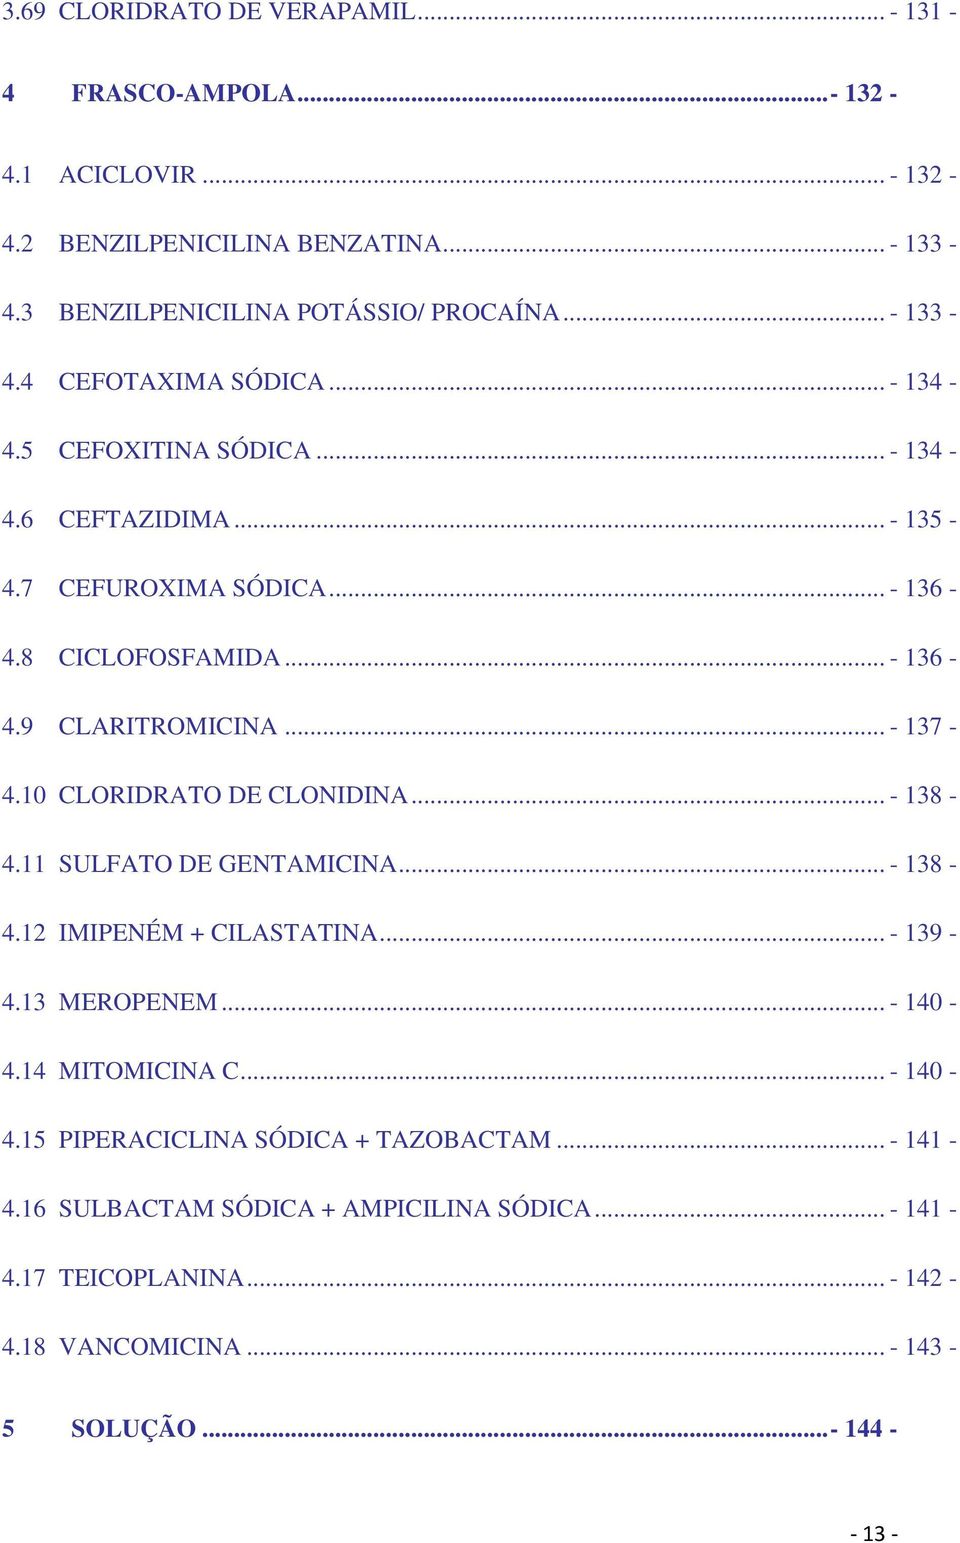 .. - 137-4.10 CLORIDRATO DE CLONIDINA... - 138-4.11 SULFATO DE GENTAMICINA... - 138-4.12 IMIPENÉM + CILASTATINA... - 139-4.13 MEROPENEM... - 140-4.